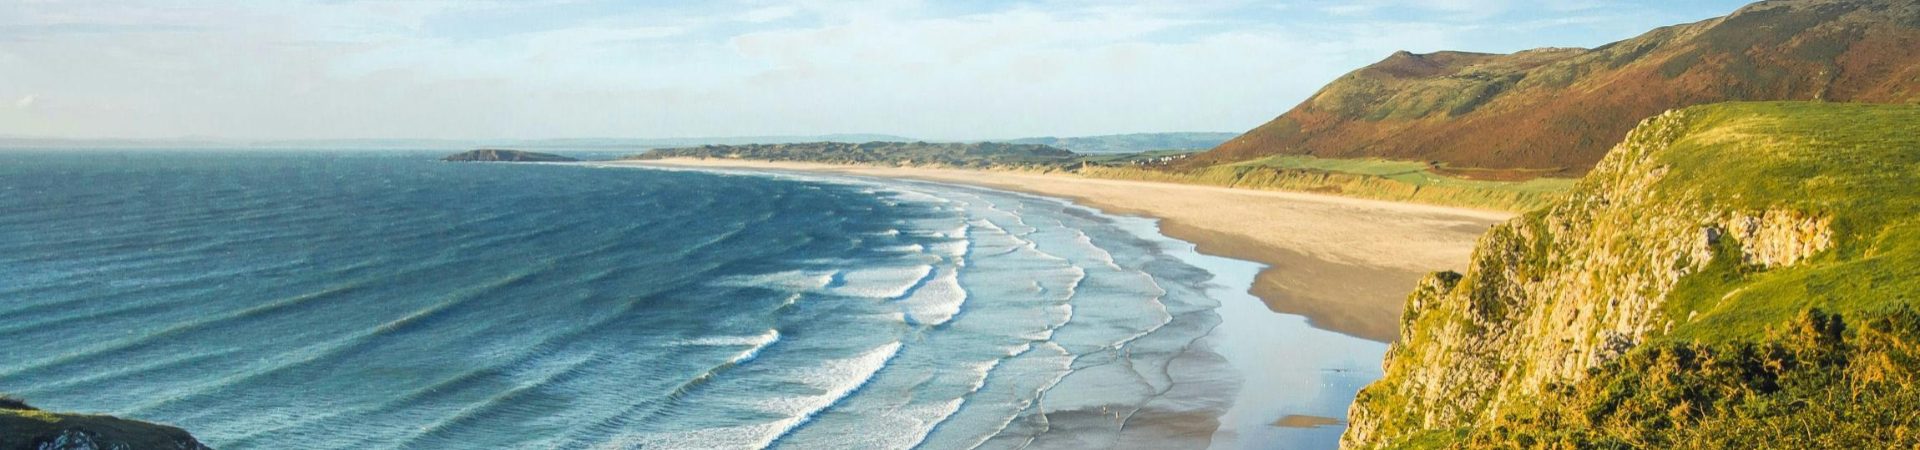 Sandy beach with waves